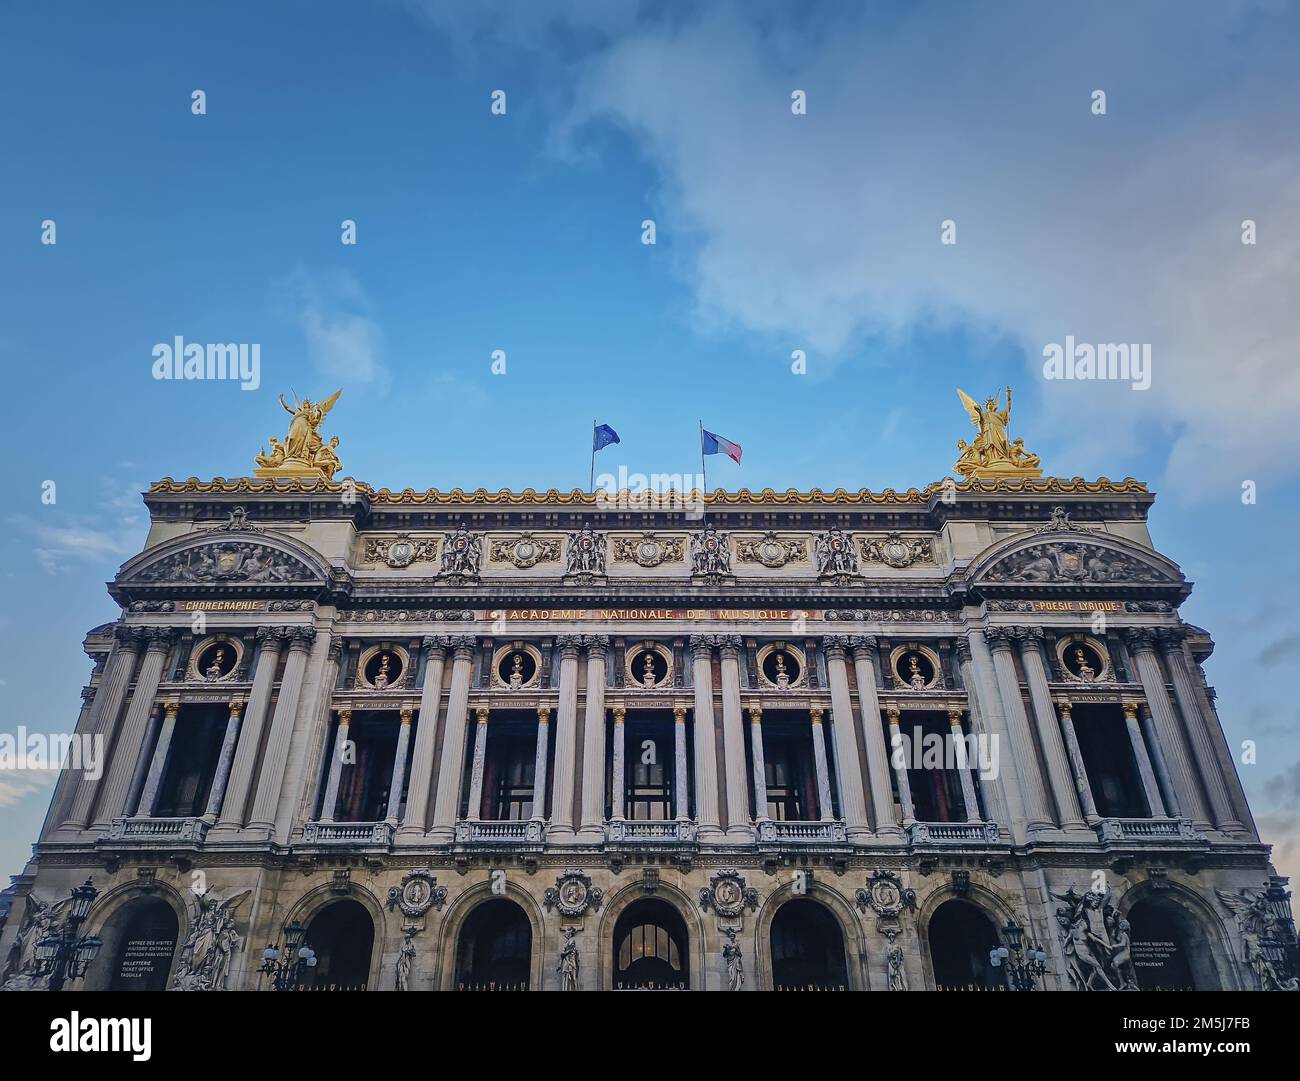 Opera Garnier Palais of Paris, France. National Music Academy facade view Stock Photo